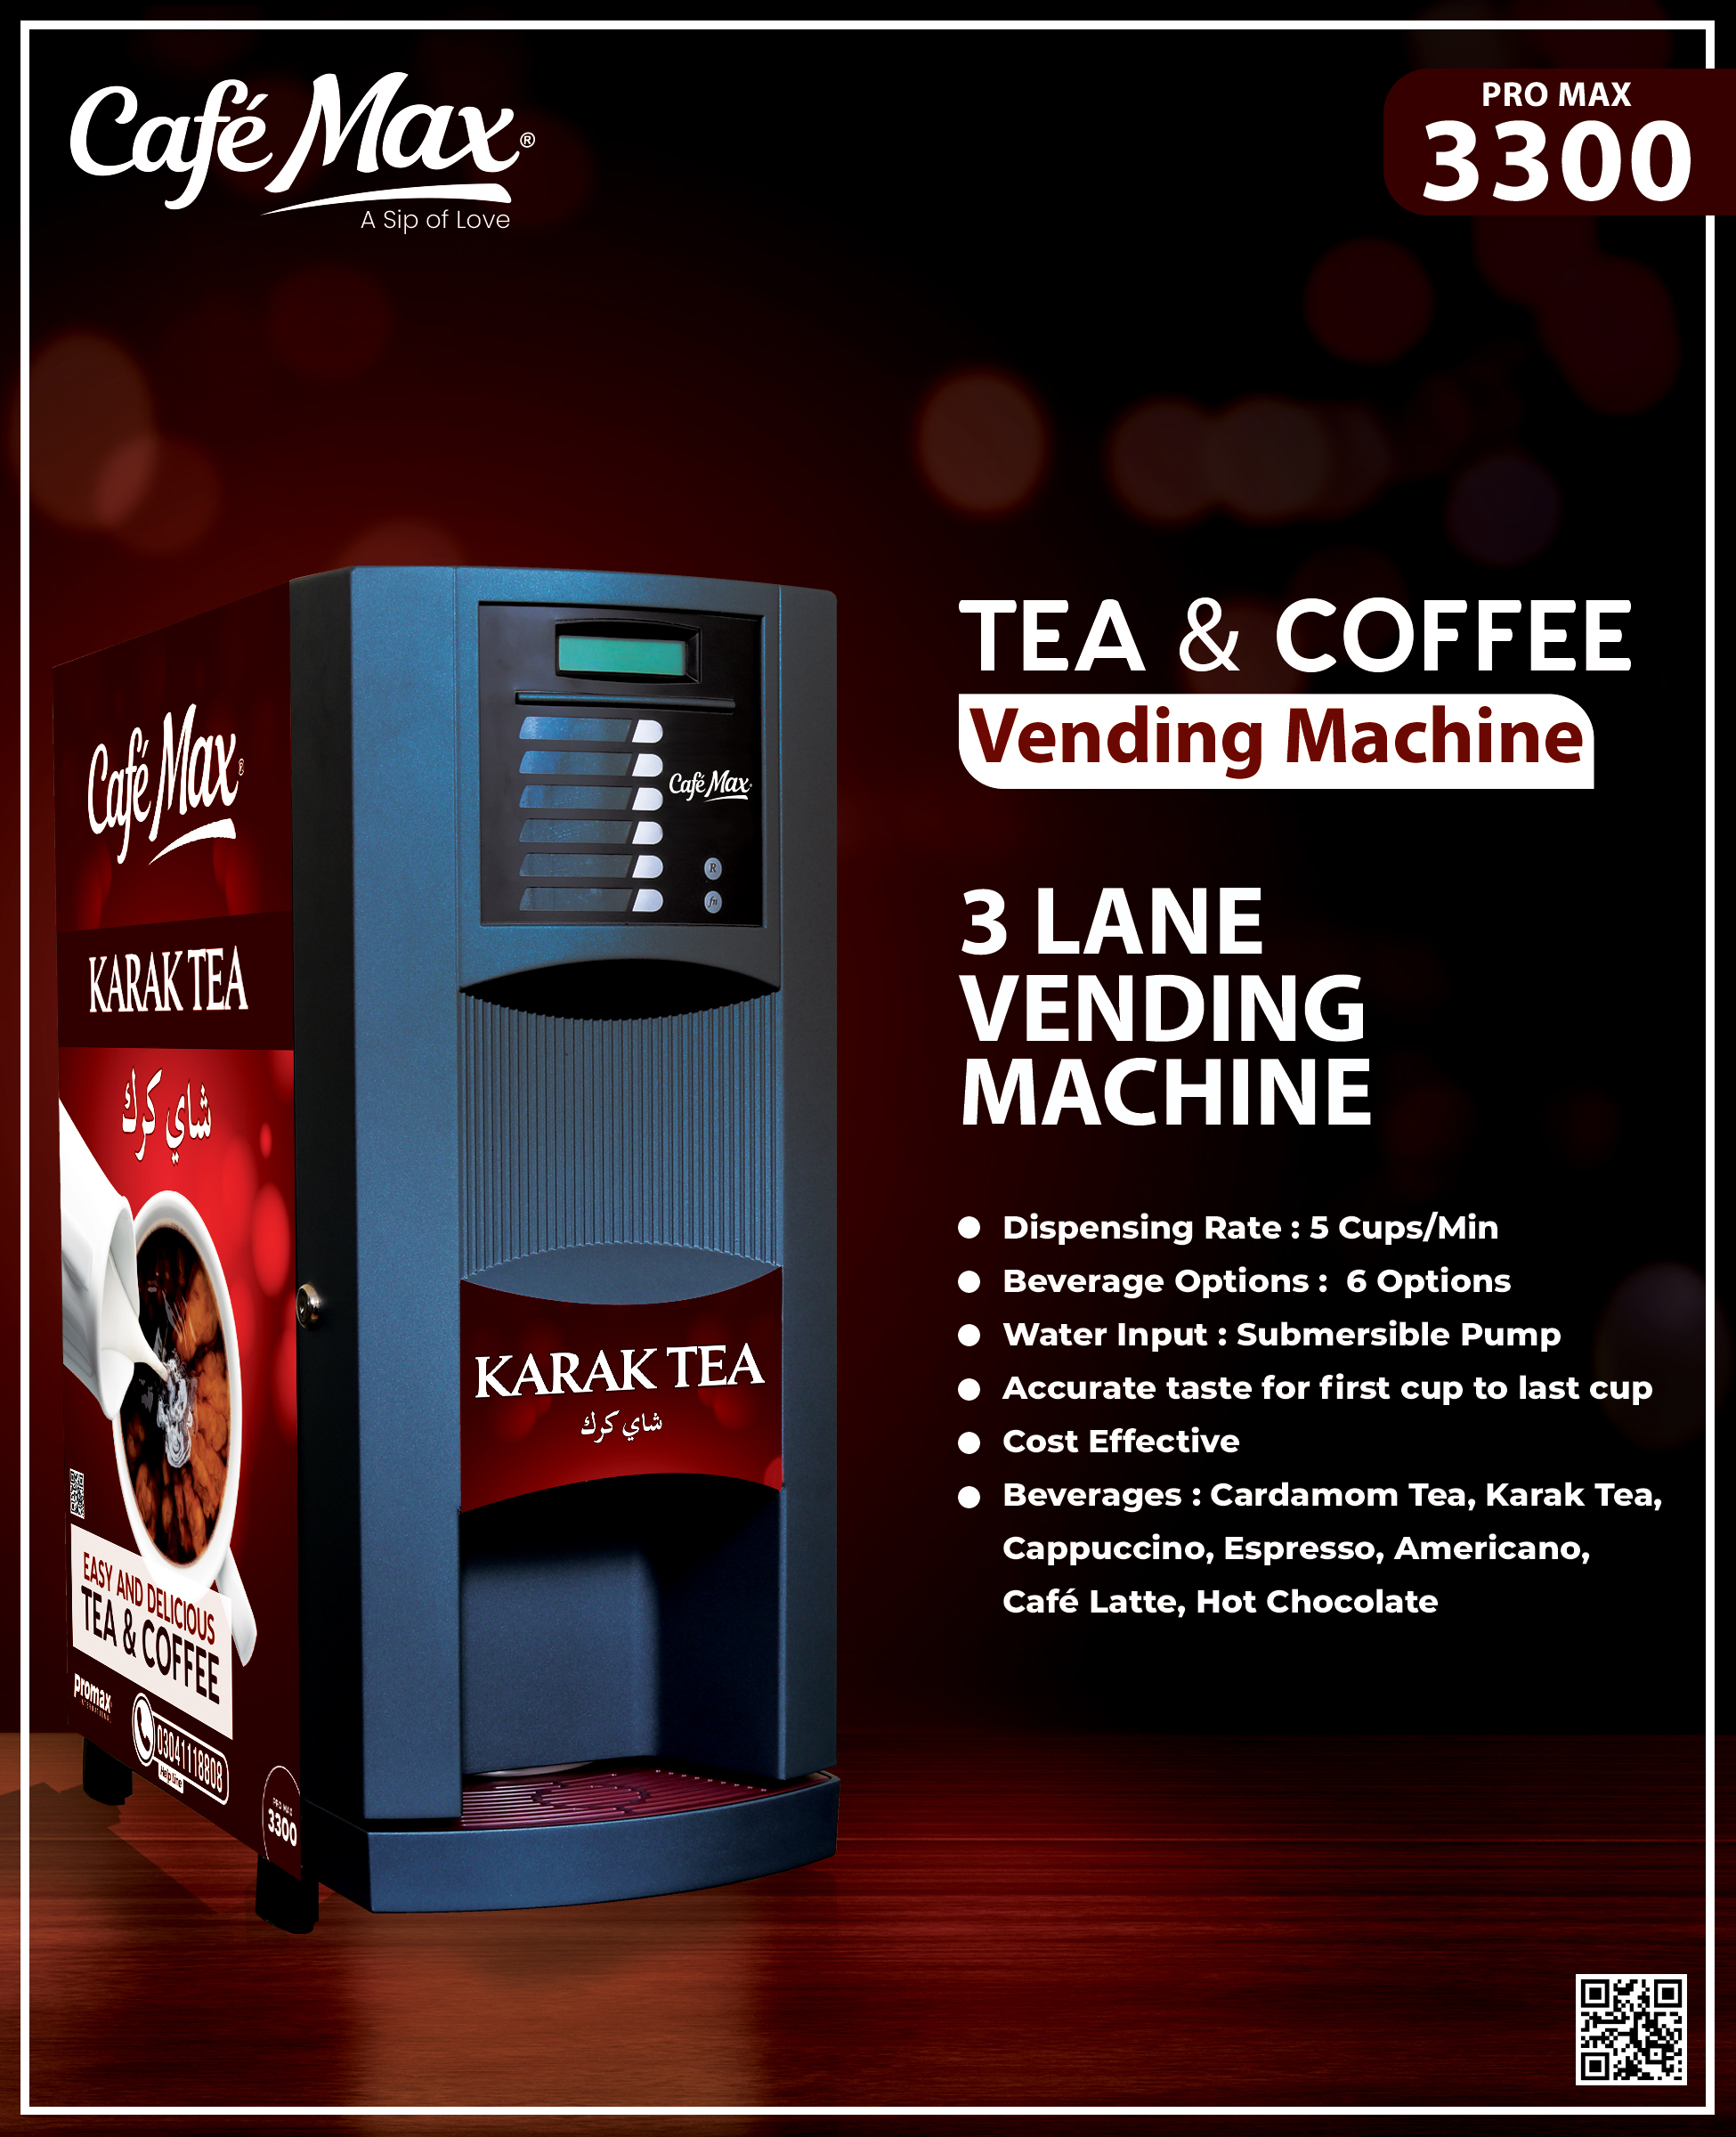 Promax 3300 vending machine